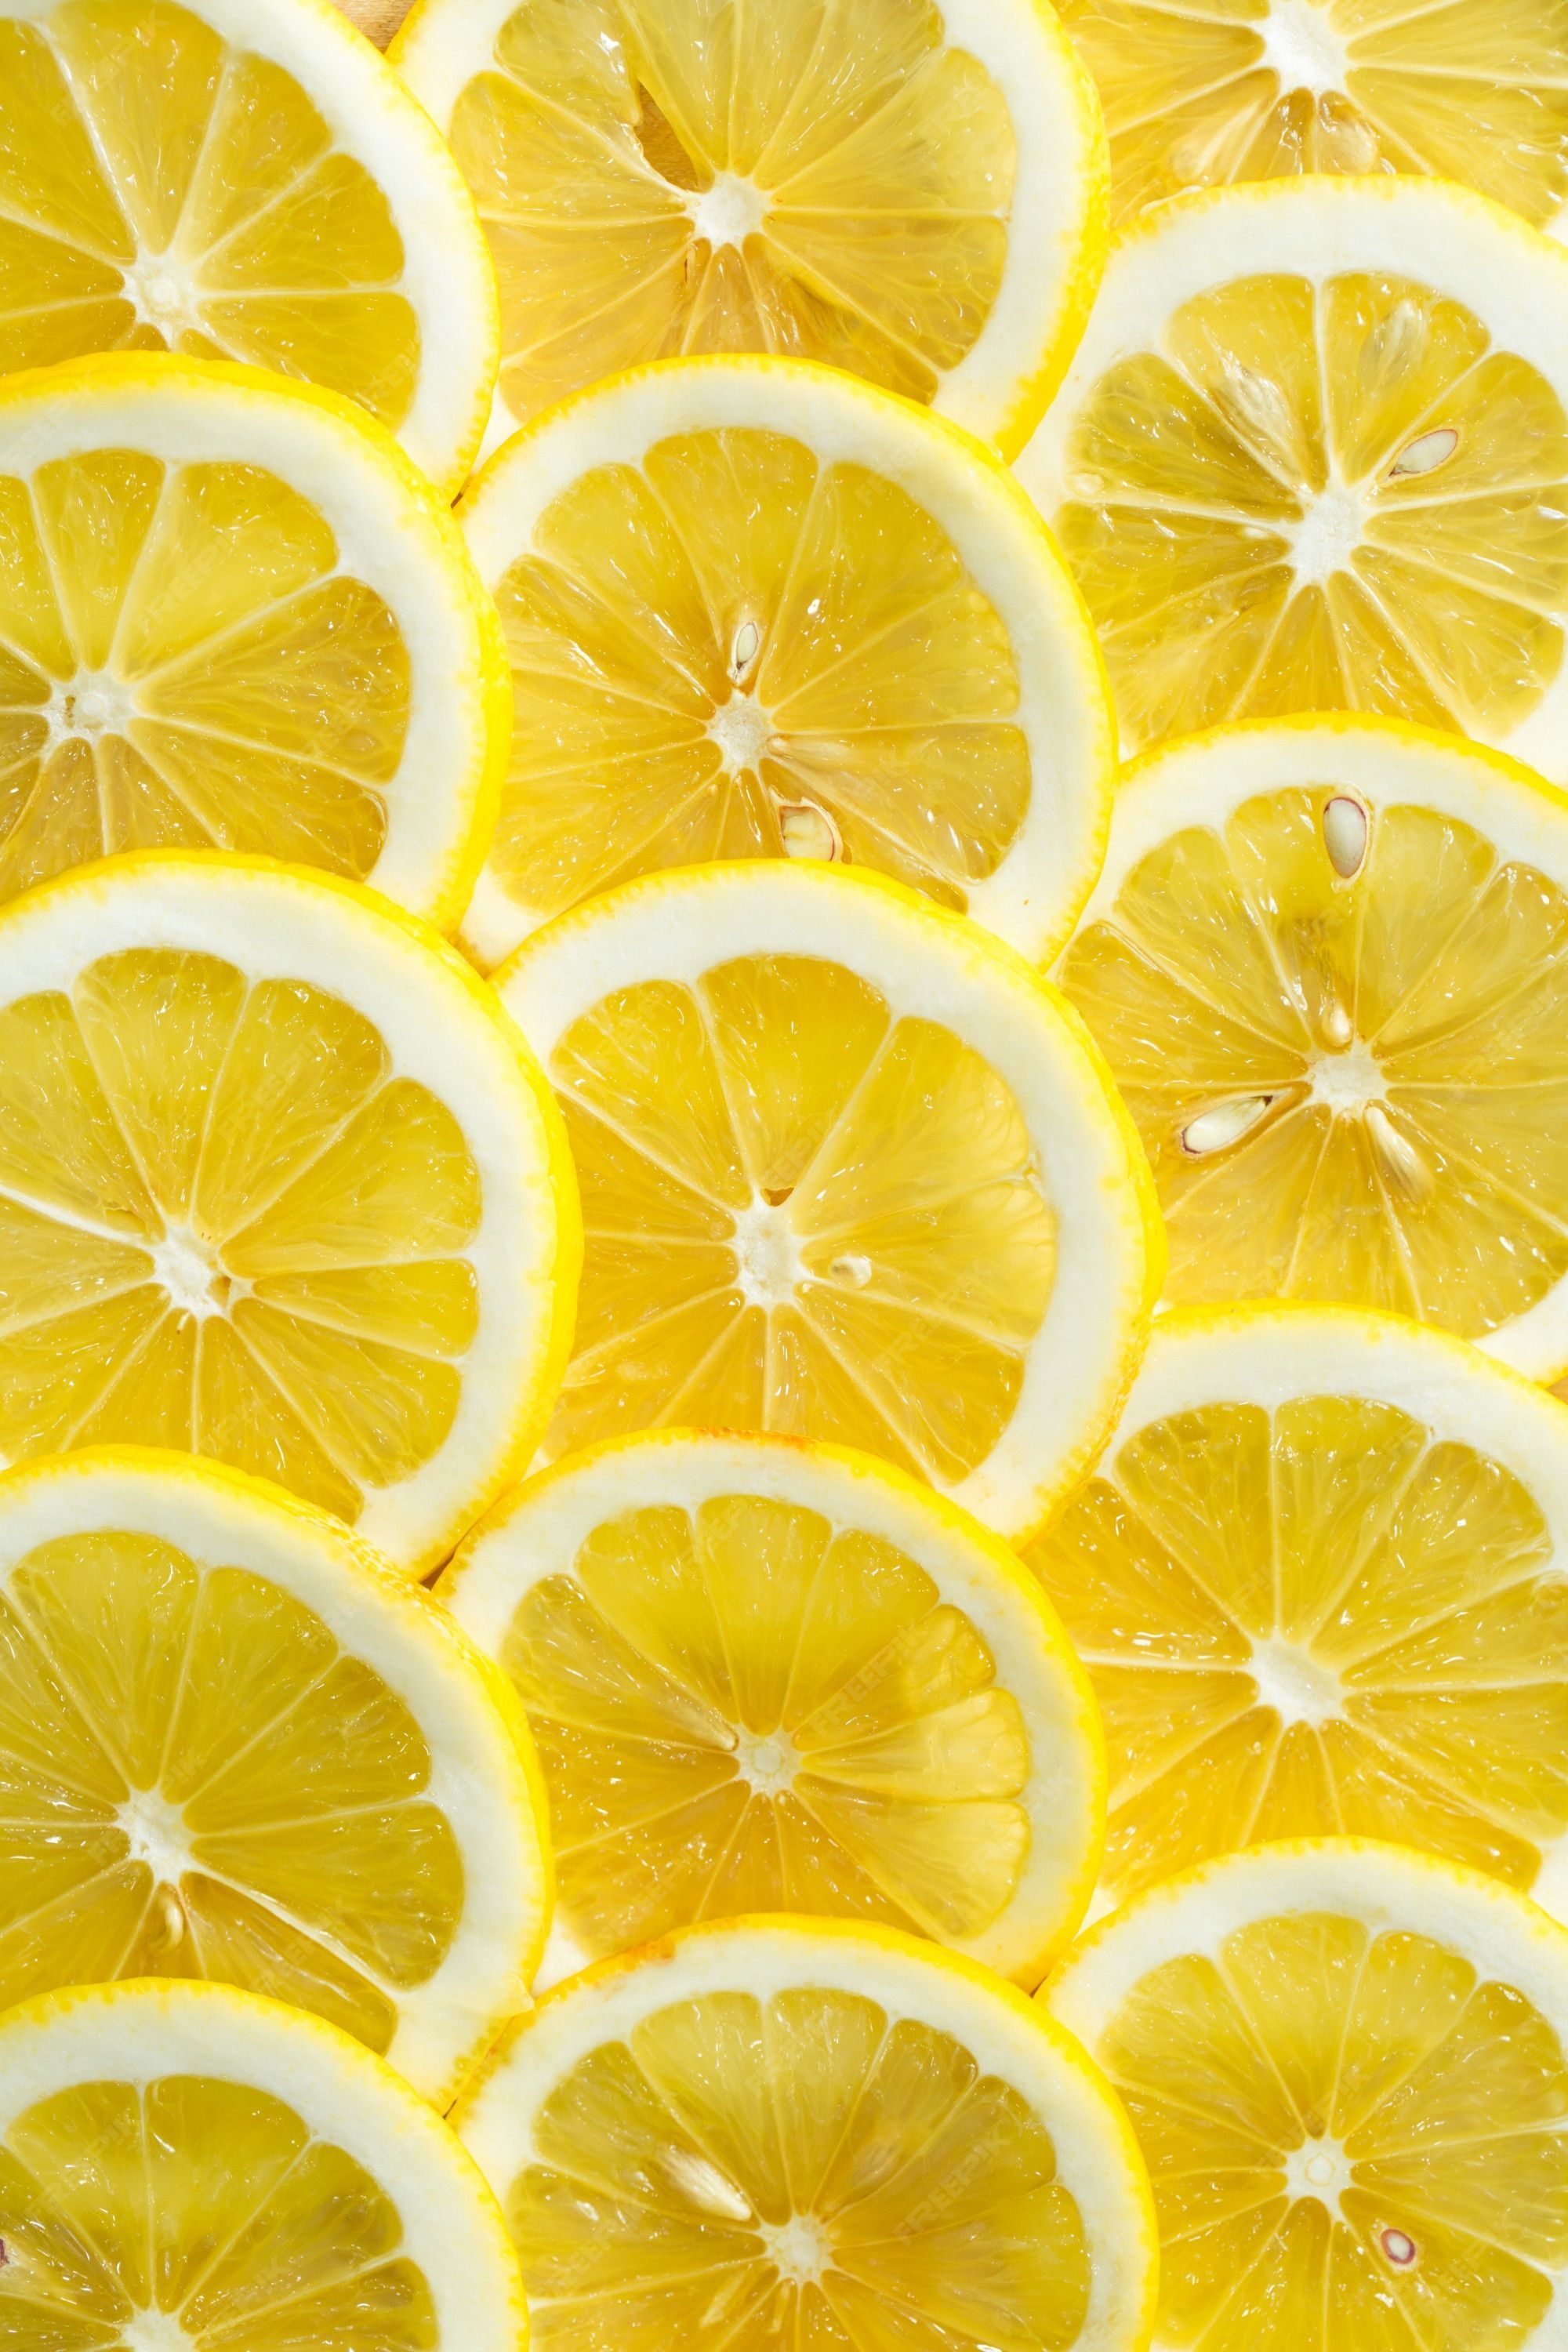 Premium Photo. A slices of fresh yellow lemon texture background pattern